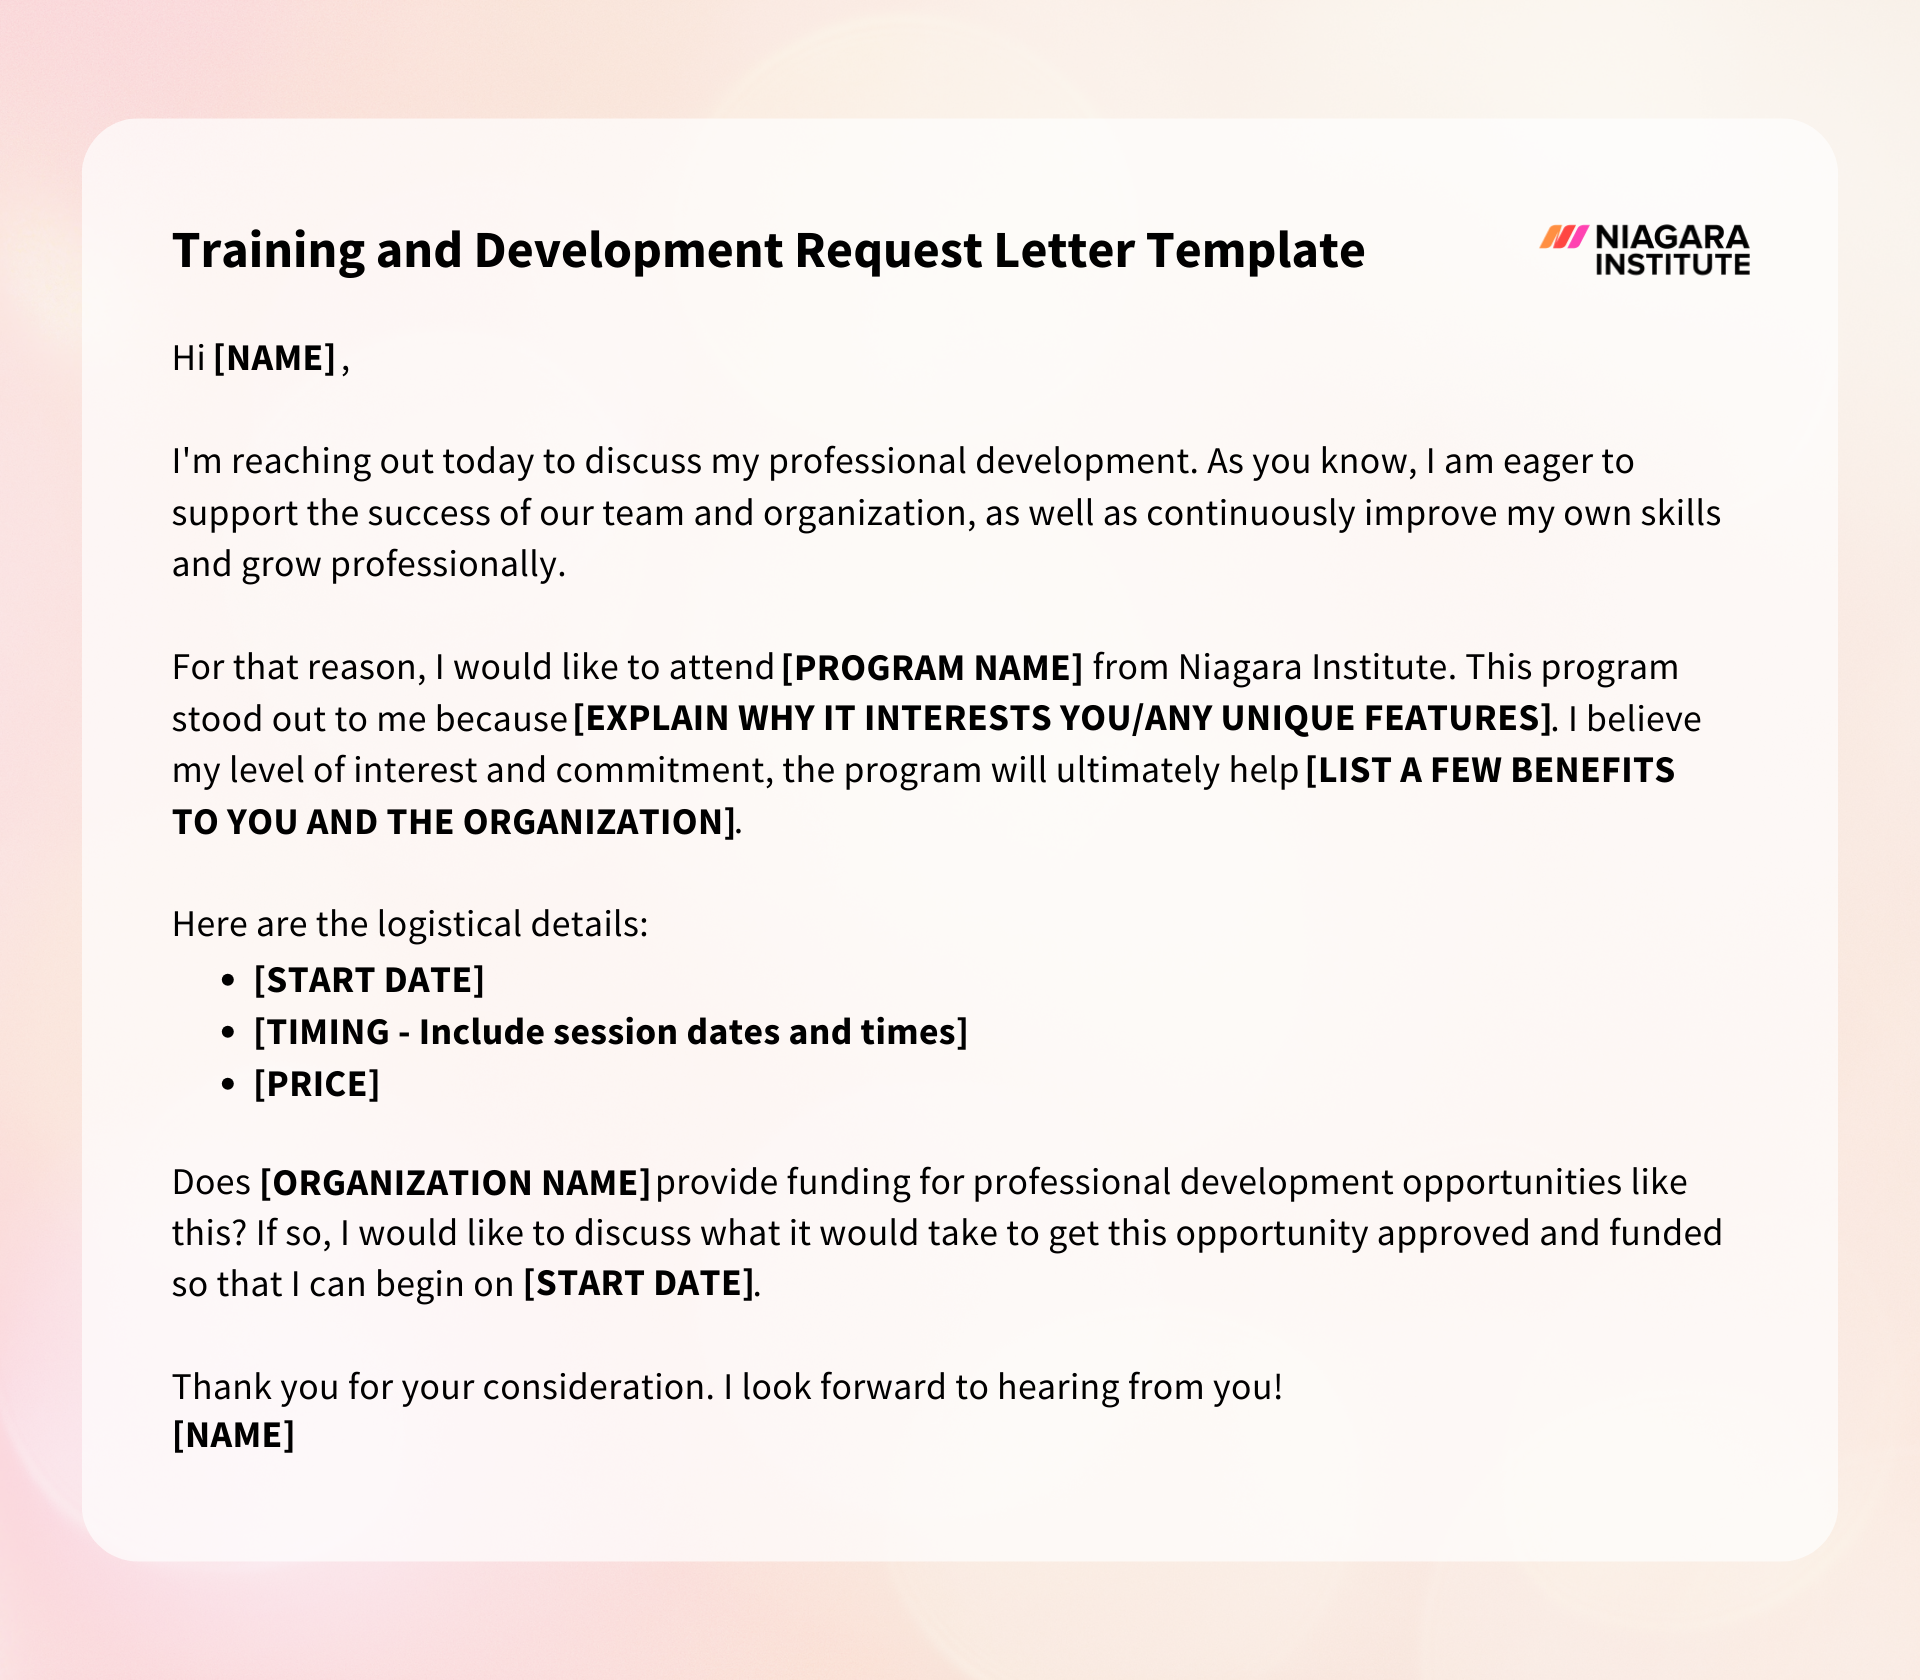 Training and Development Request Letter Template - Niagara Institute